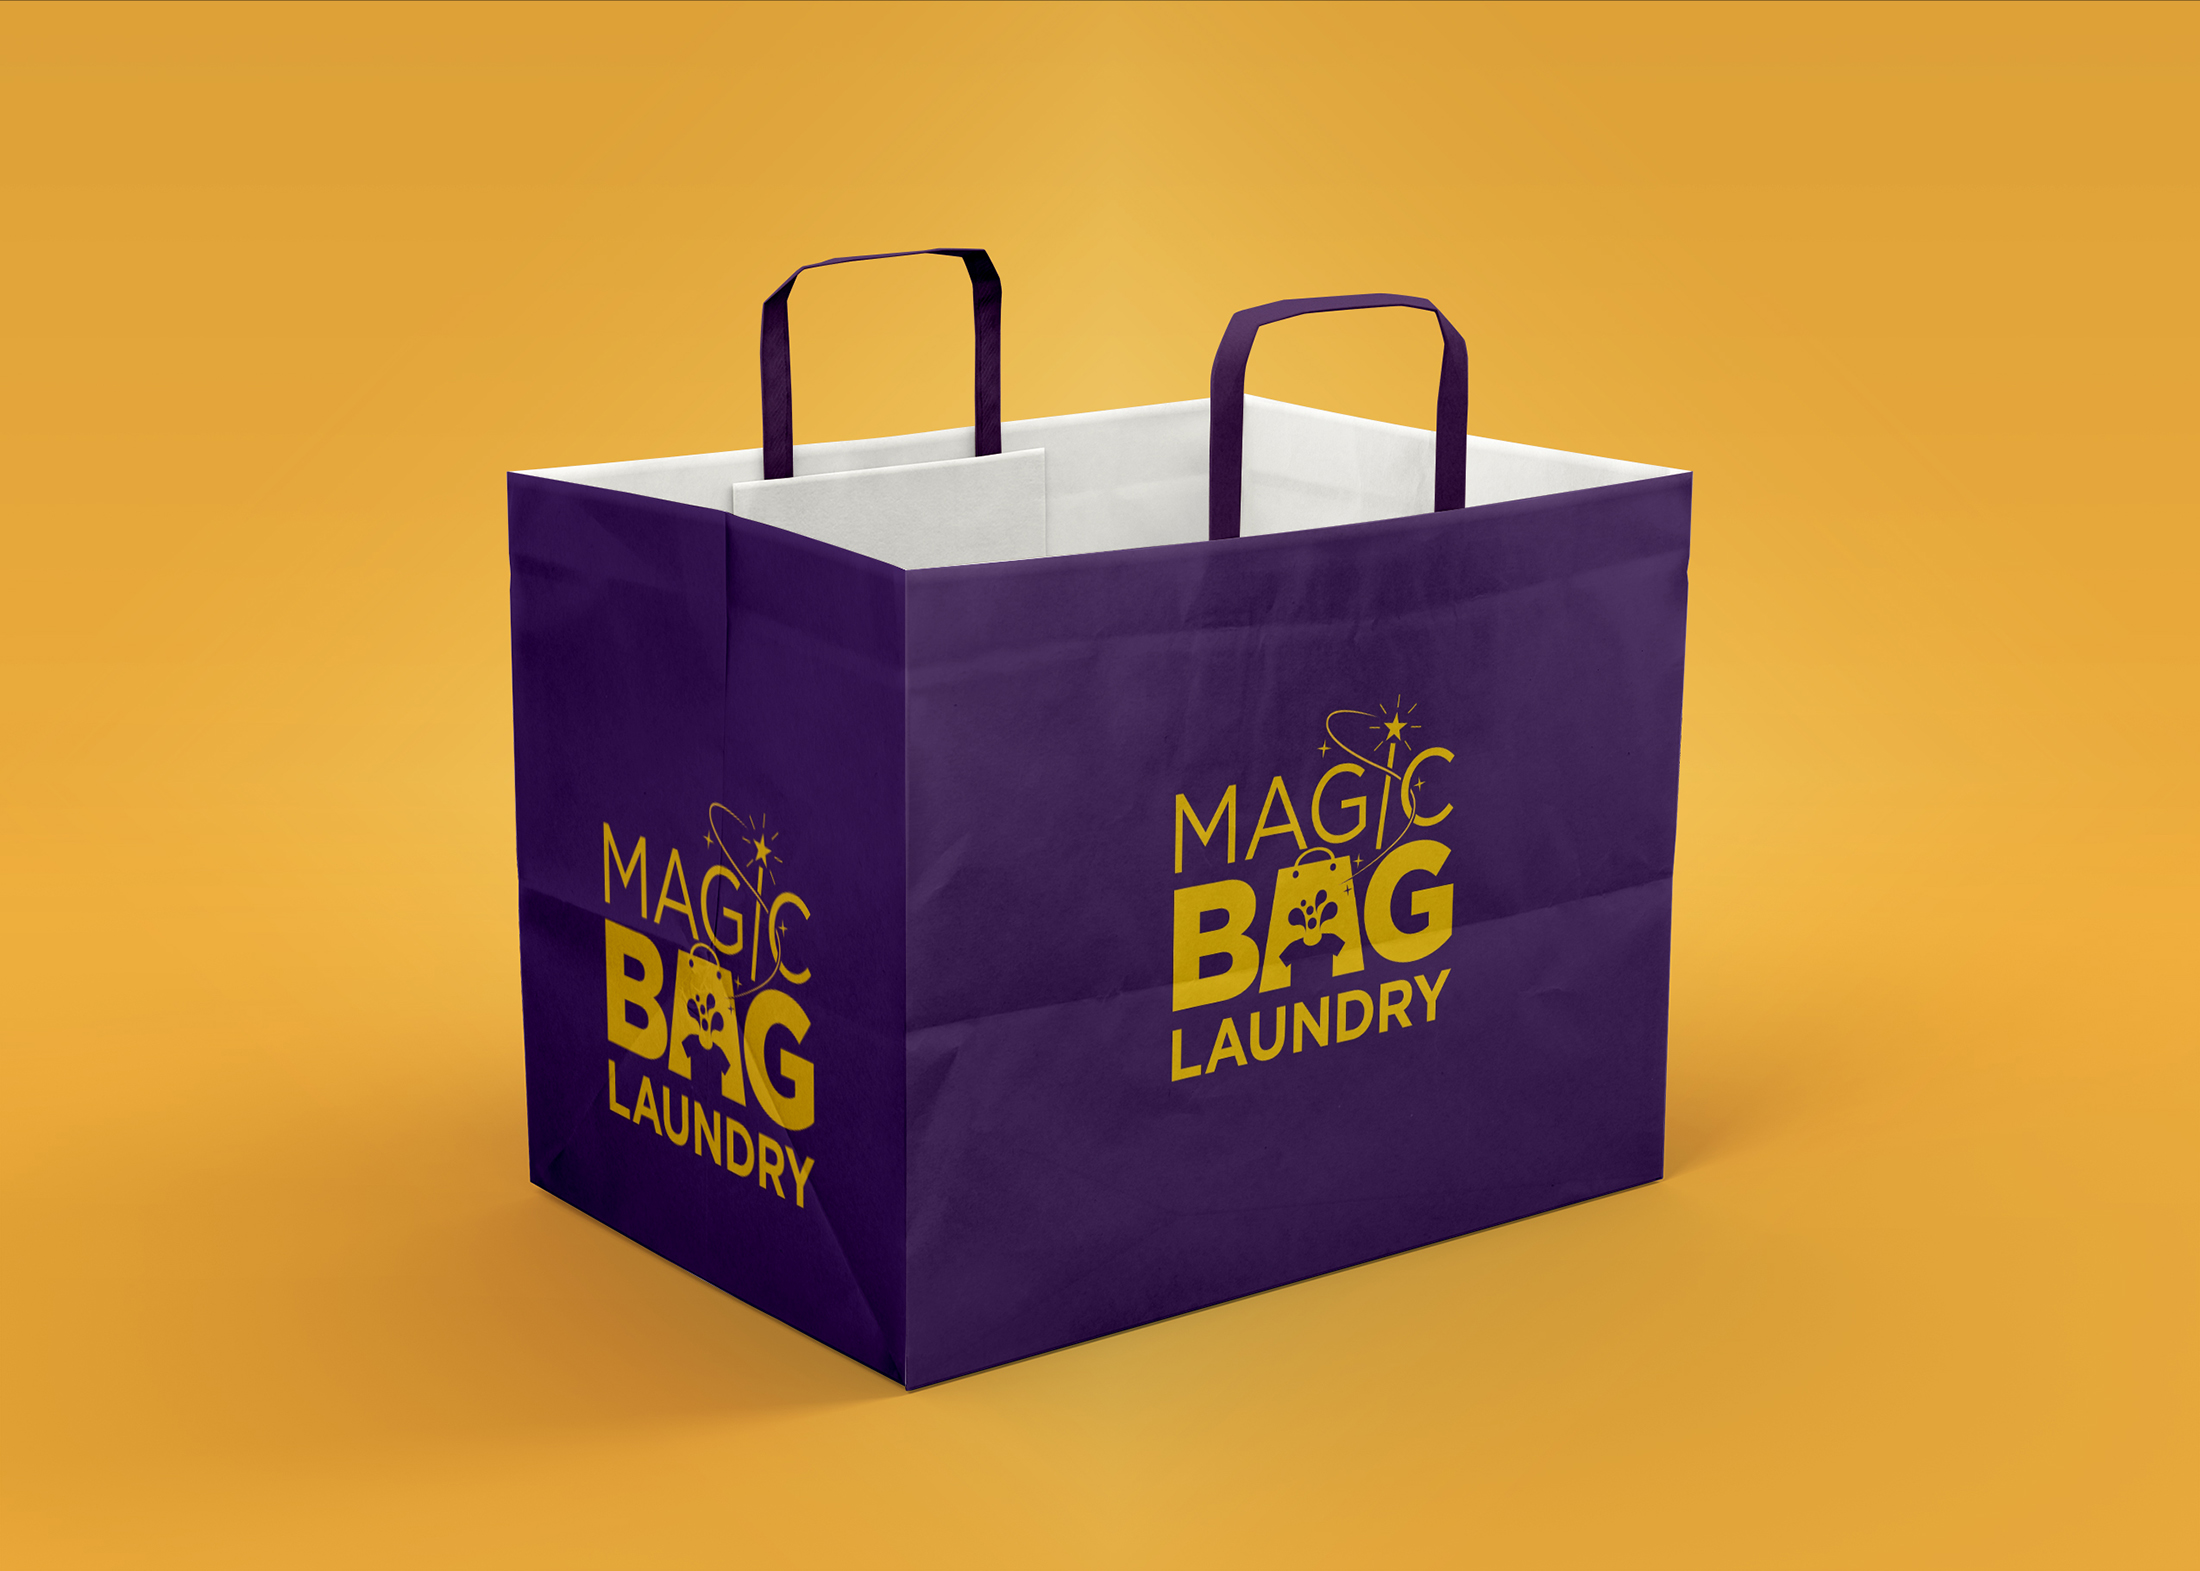 Free Wide Purple Bag Mockup